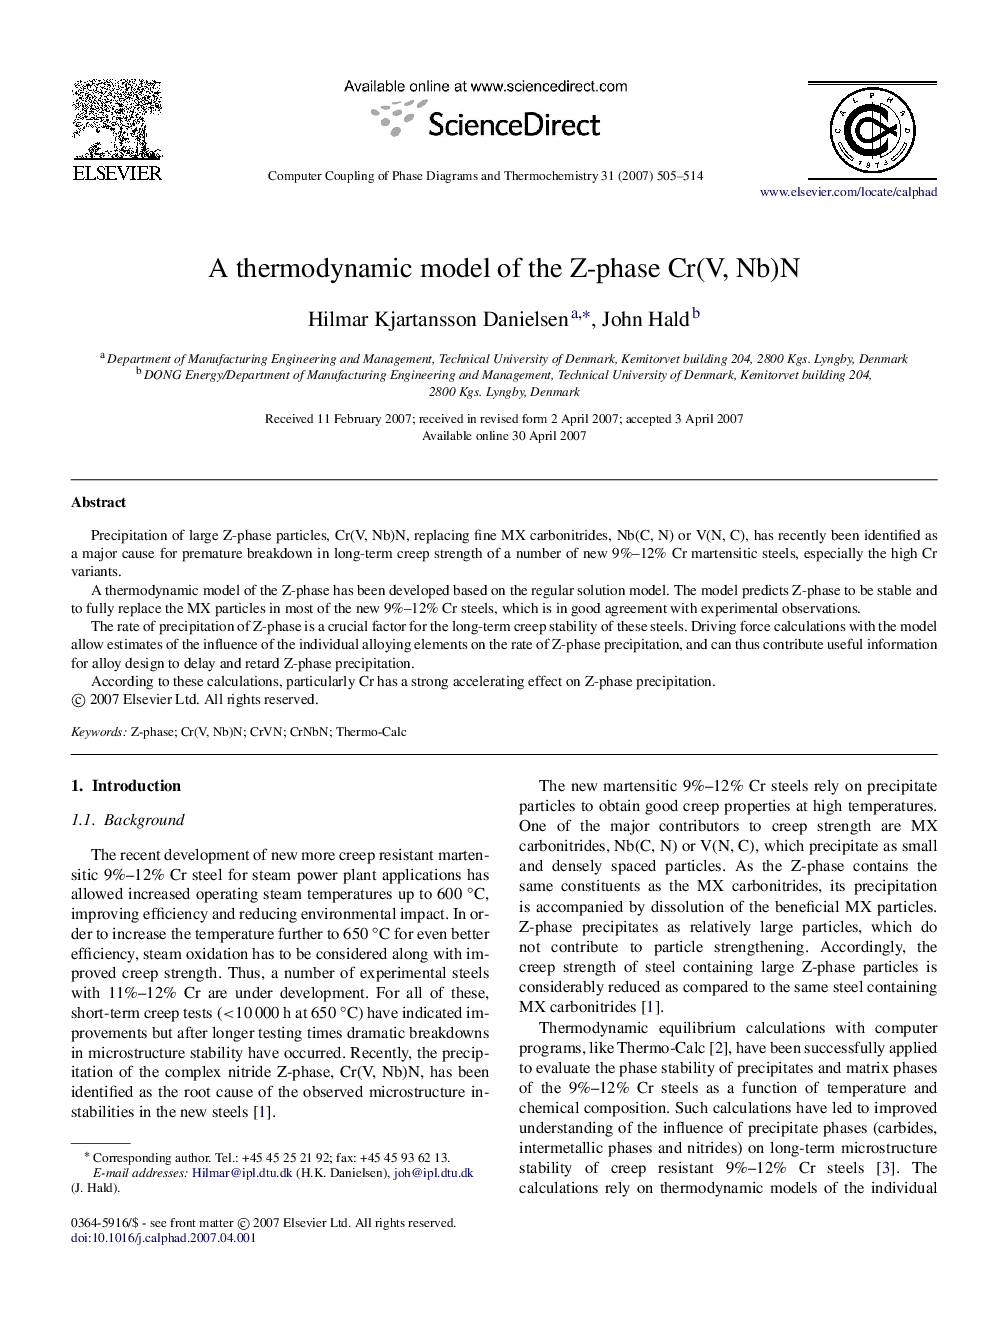 A thermodynamic model of the Z-phase Cr(V, Nb)N